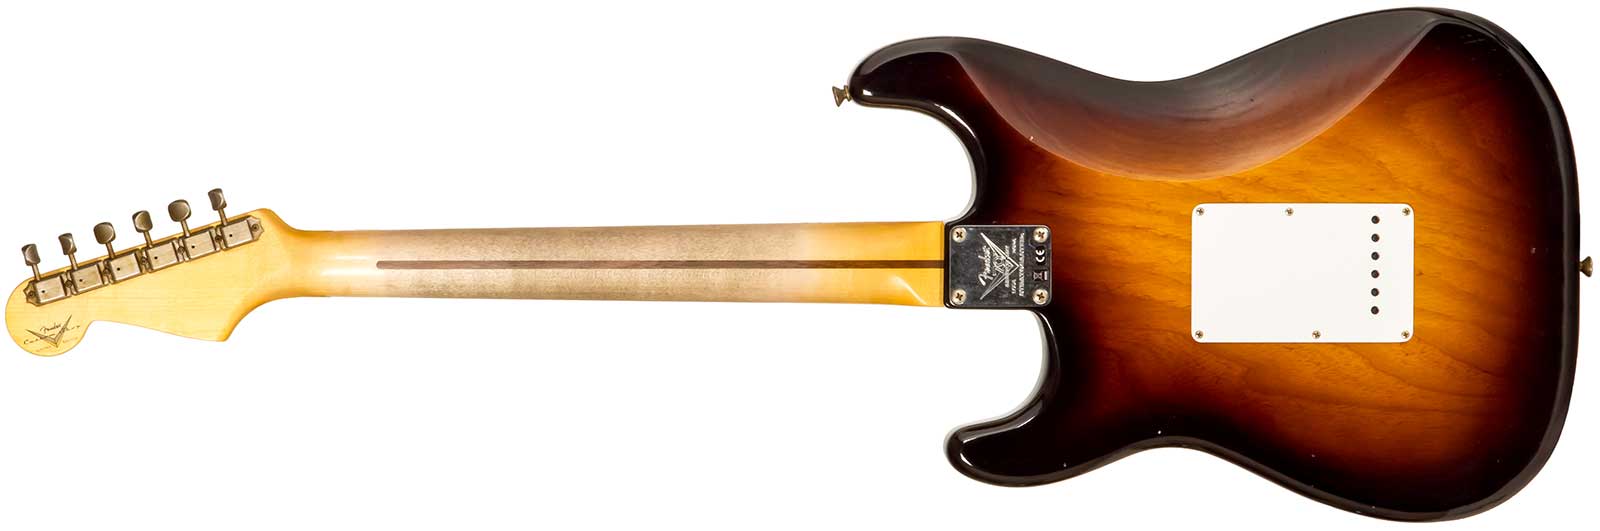 Fender Custom Shop Strat 1954 70th Anniv. 3s Trem Mn #xn4193 - Journeyman Relic Wide-fade 2-color Sunburst - Str shape electric guitar - Variation 2